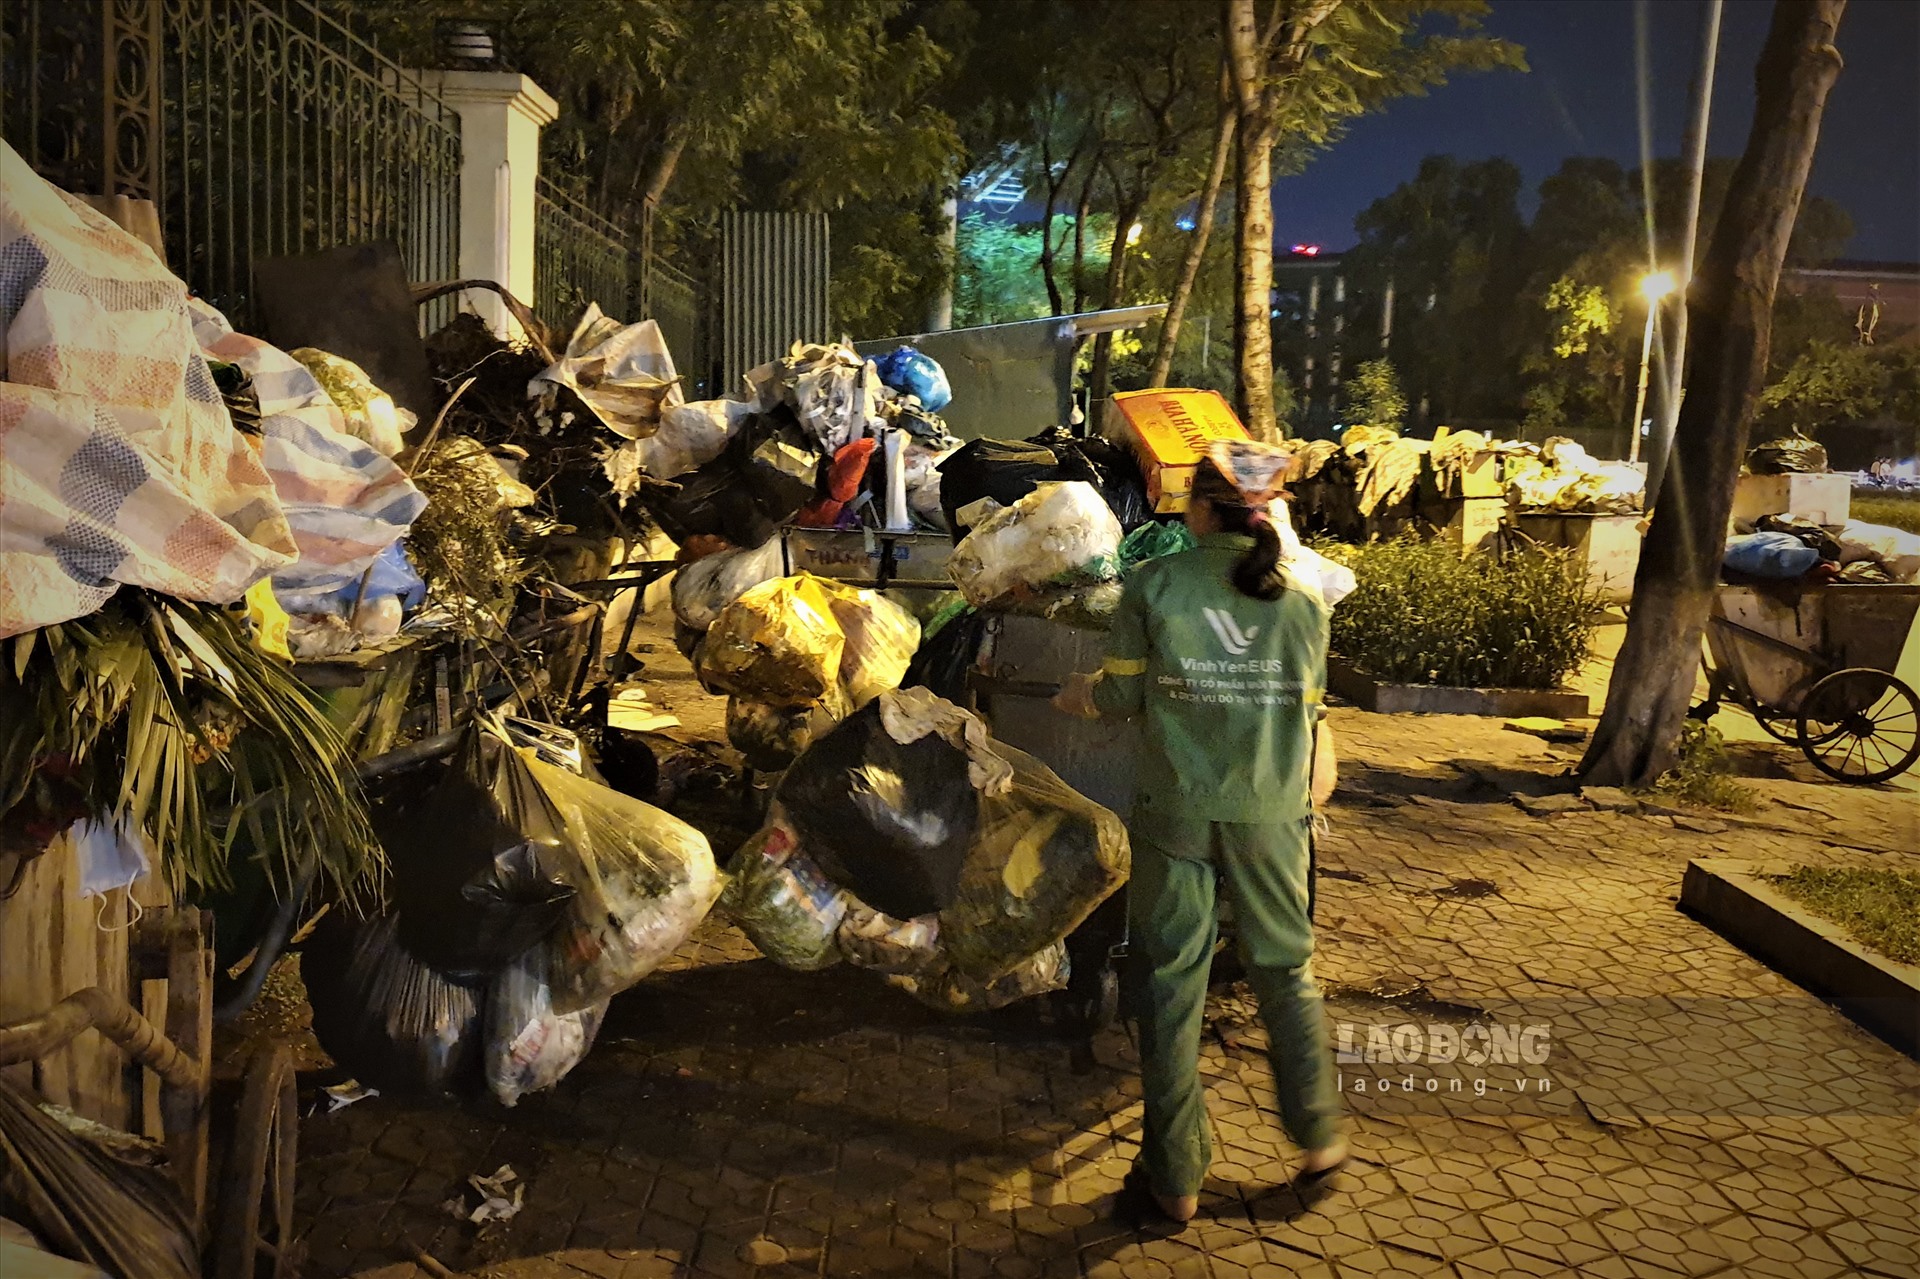 Hanoi faces rubbish pile-up following compensation dispute